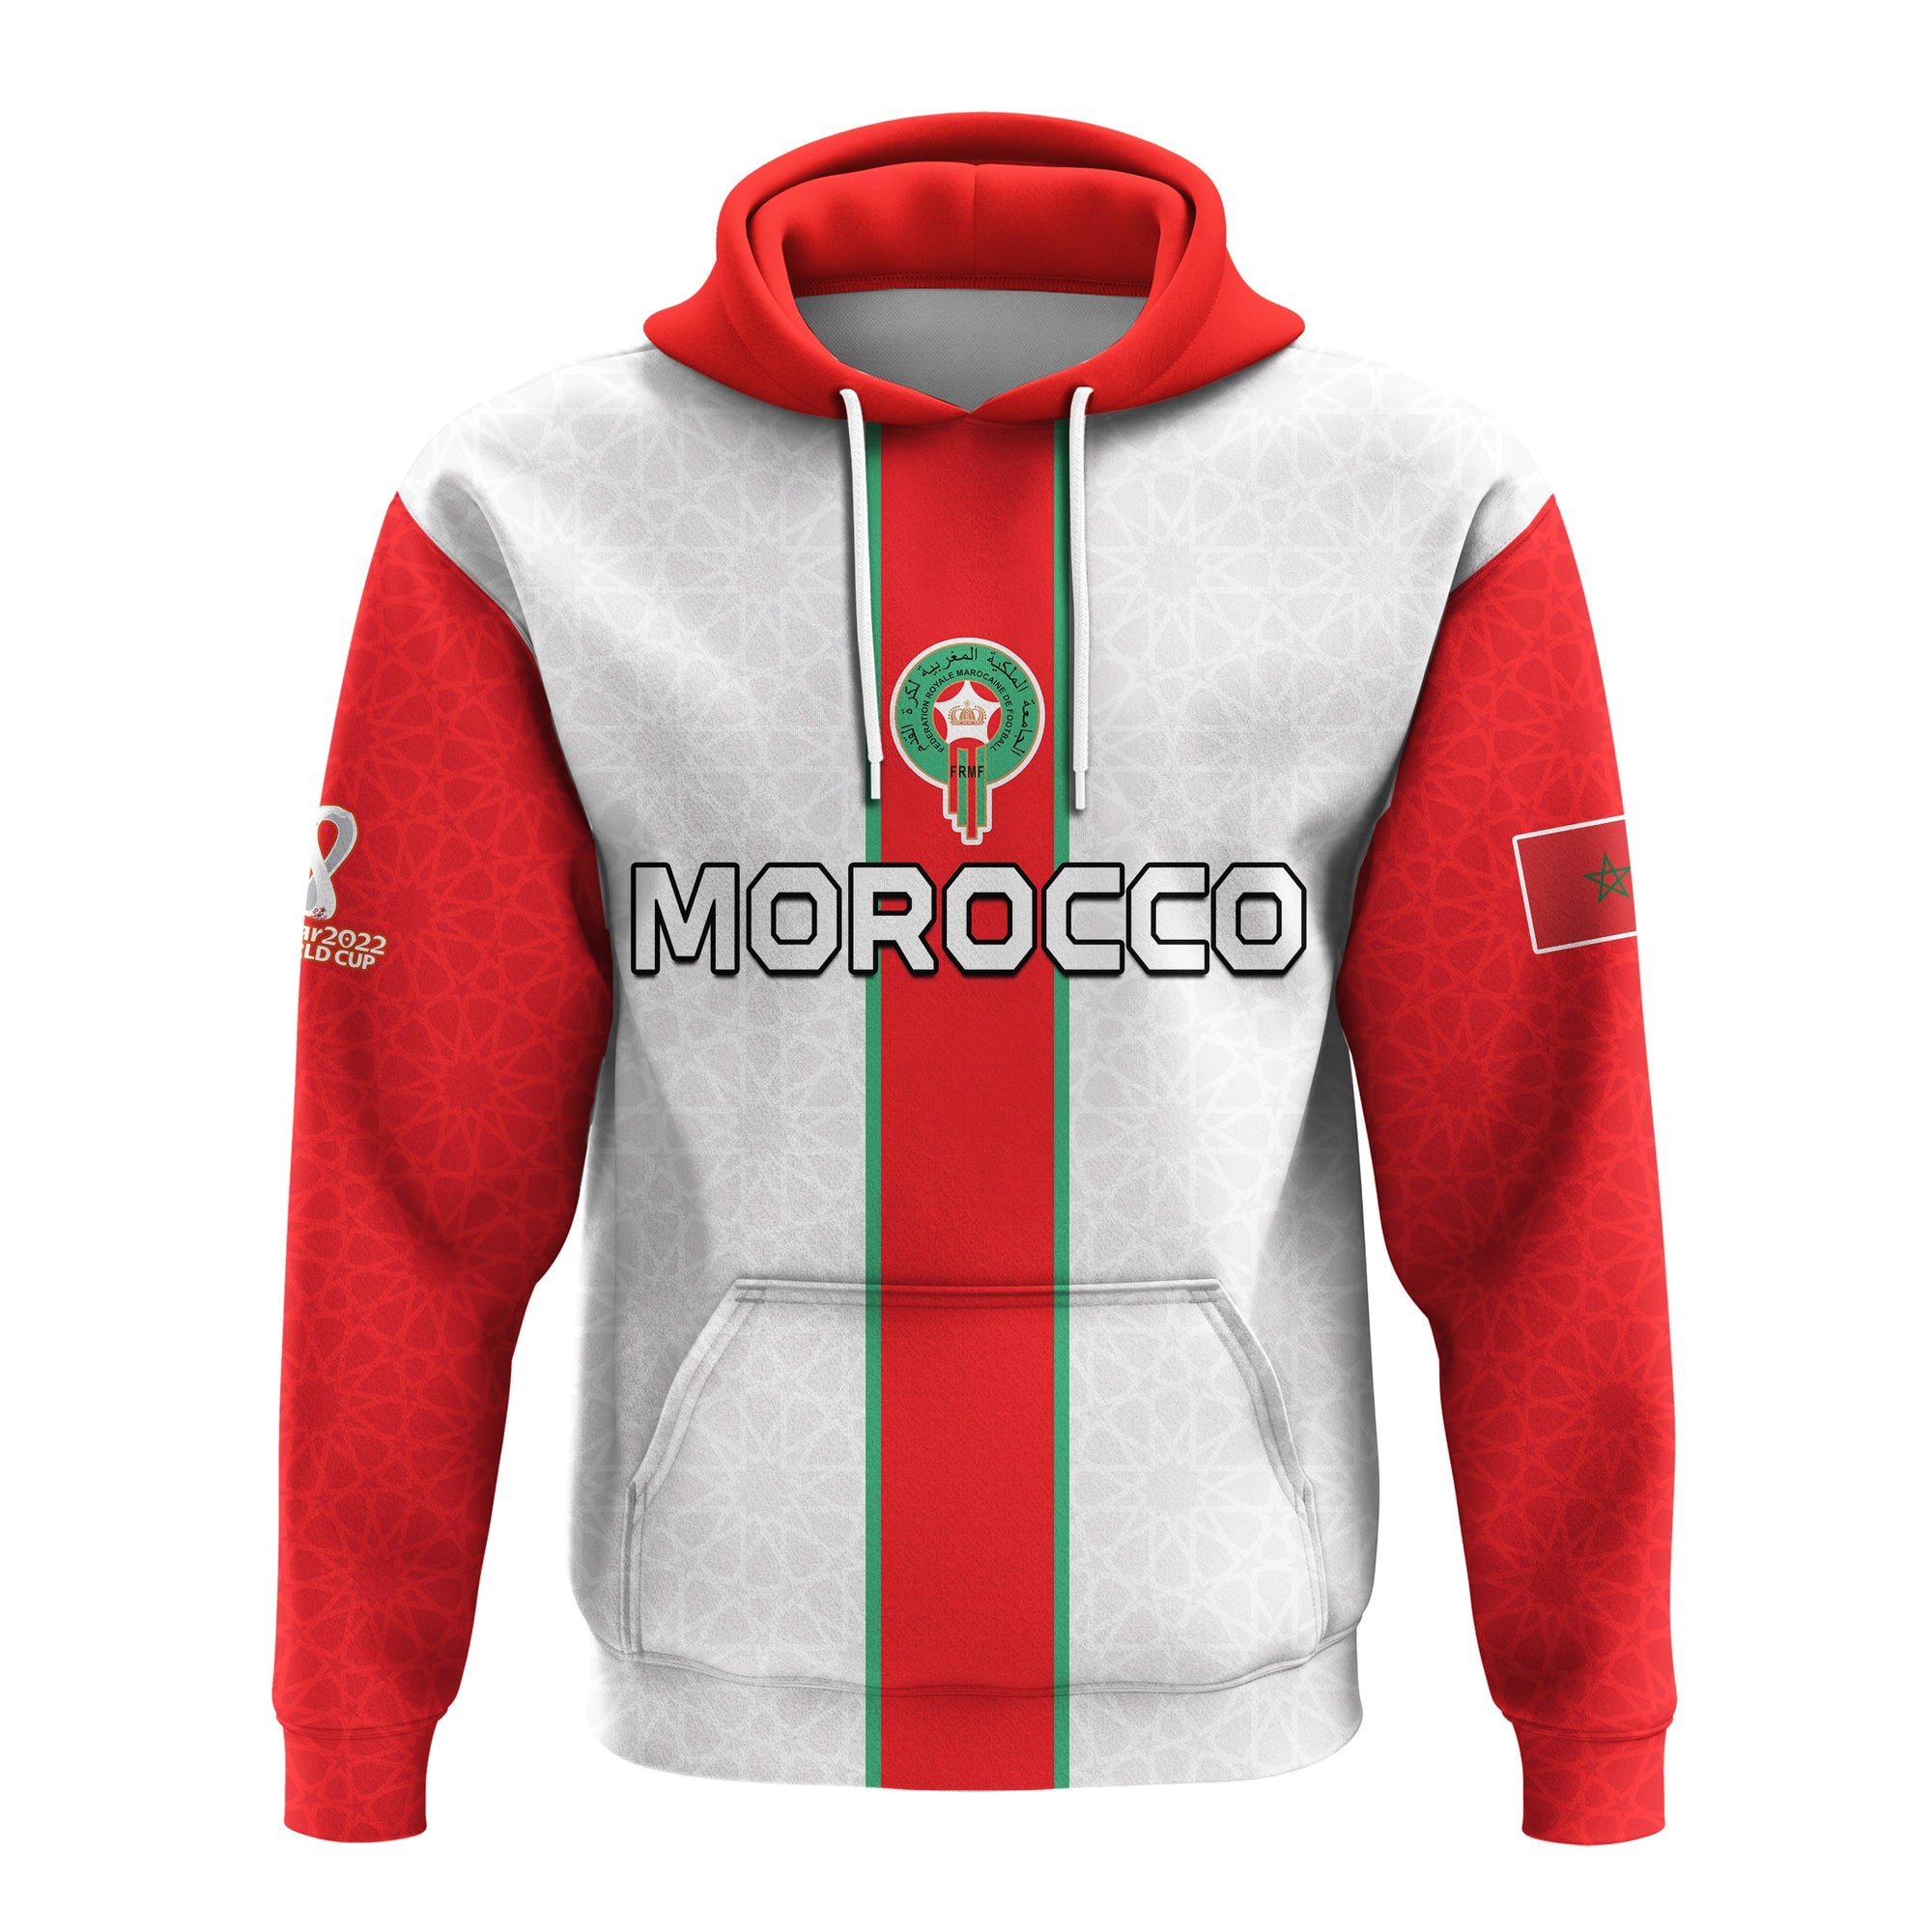 morocco-football-hoodie-world-cup-2022-soccer-lions-de-latlas-champions